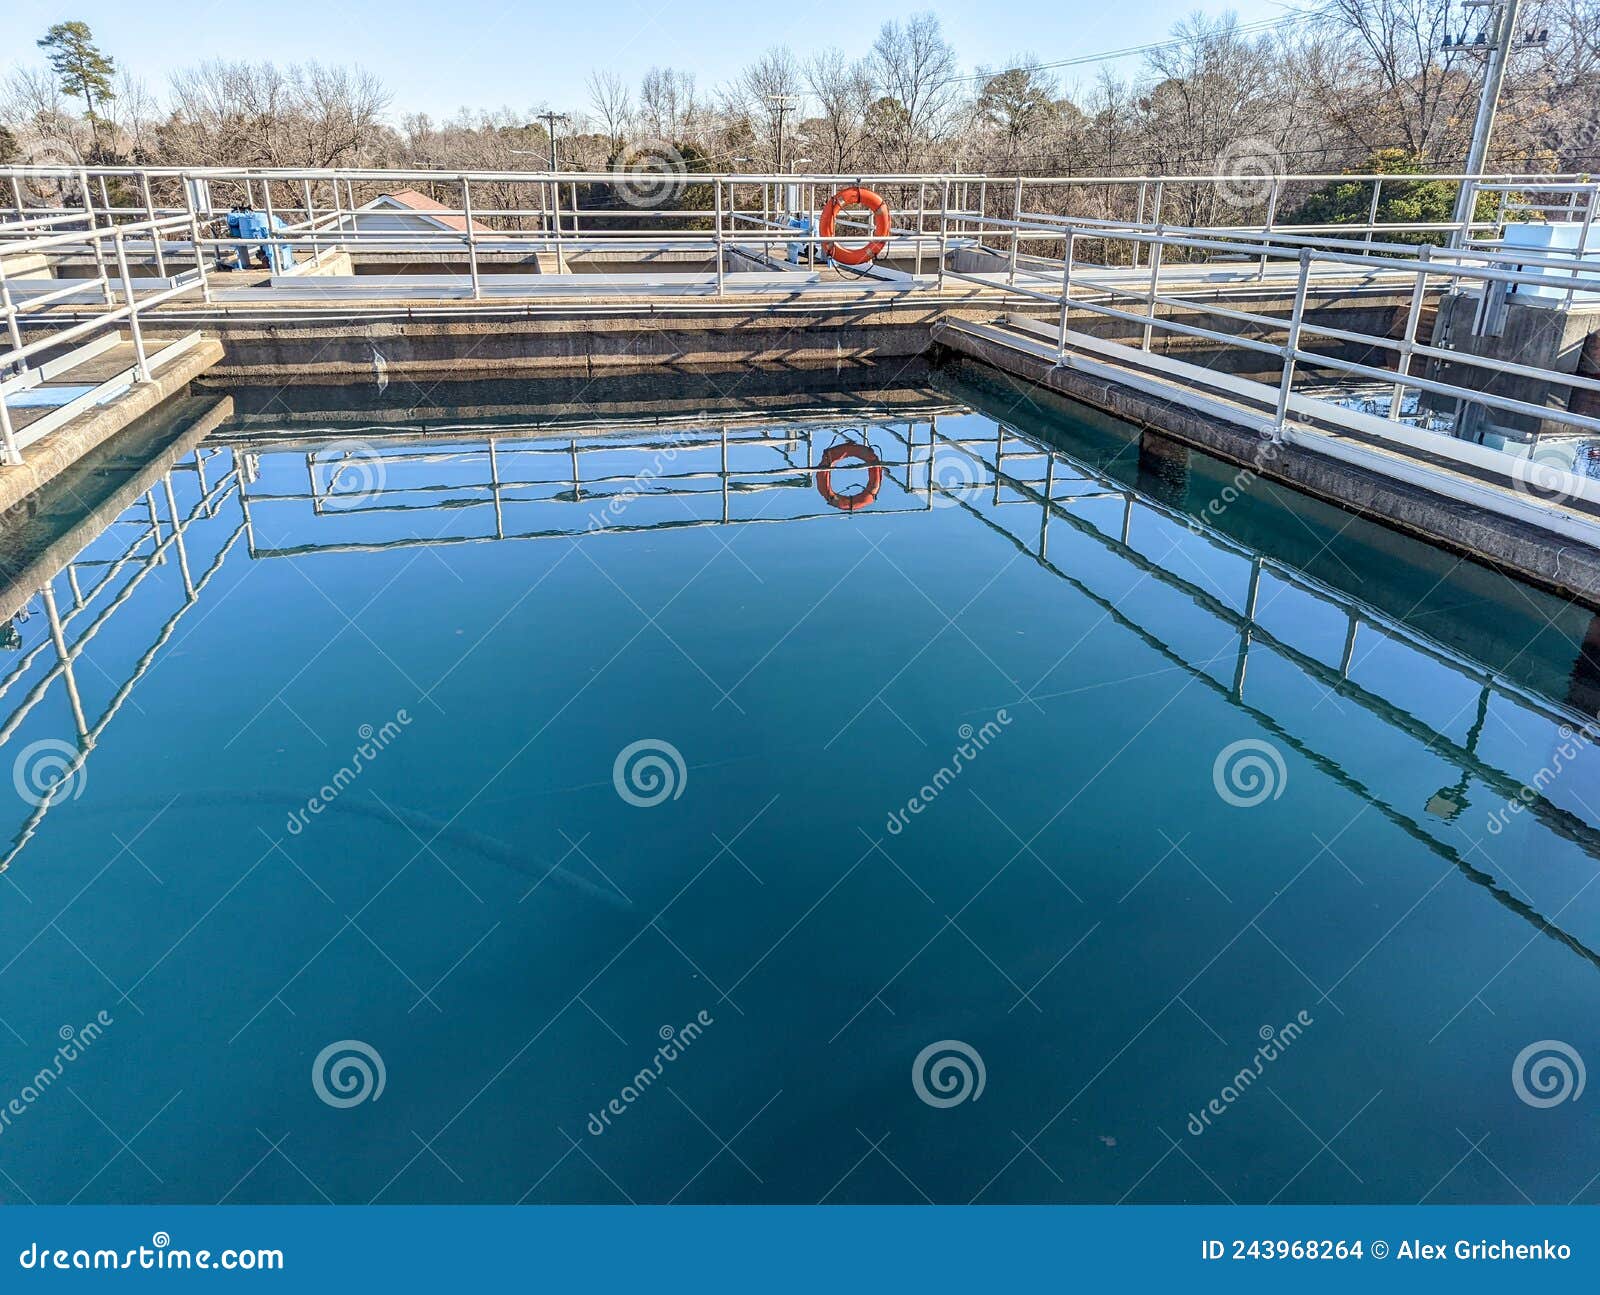 city water treatment plant sediment basin